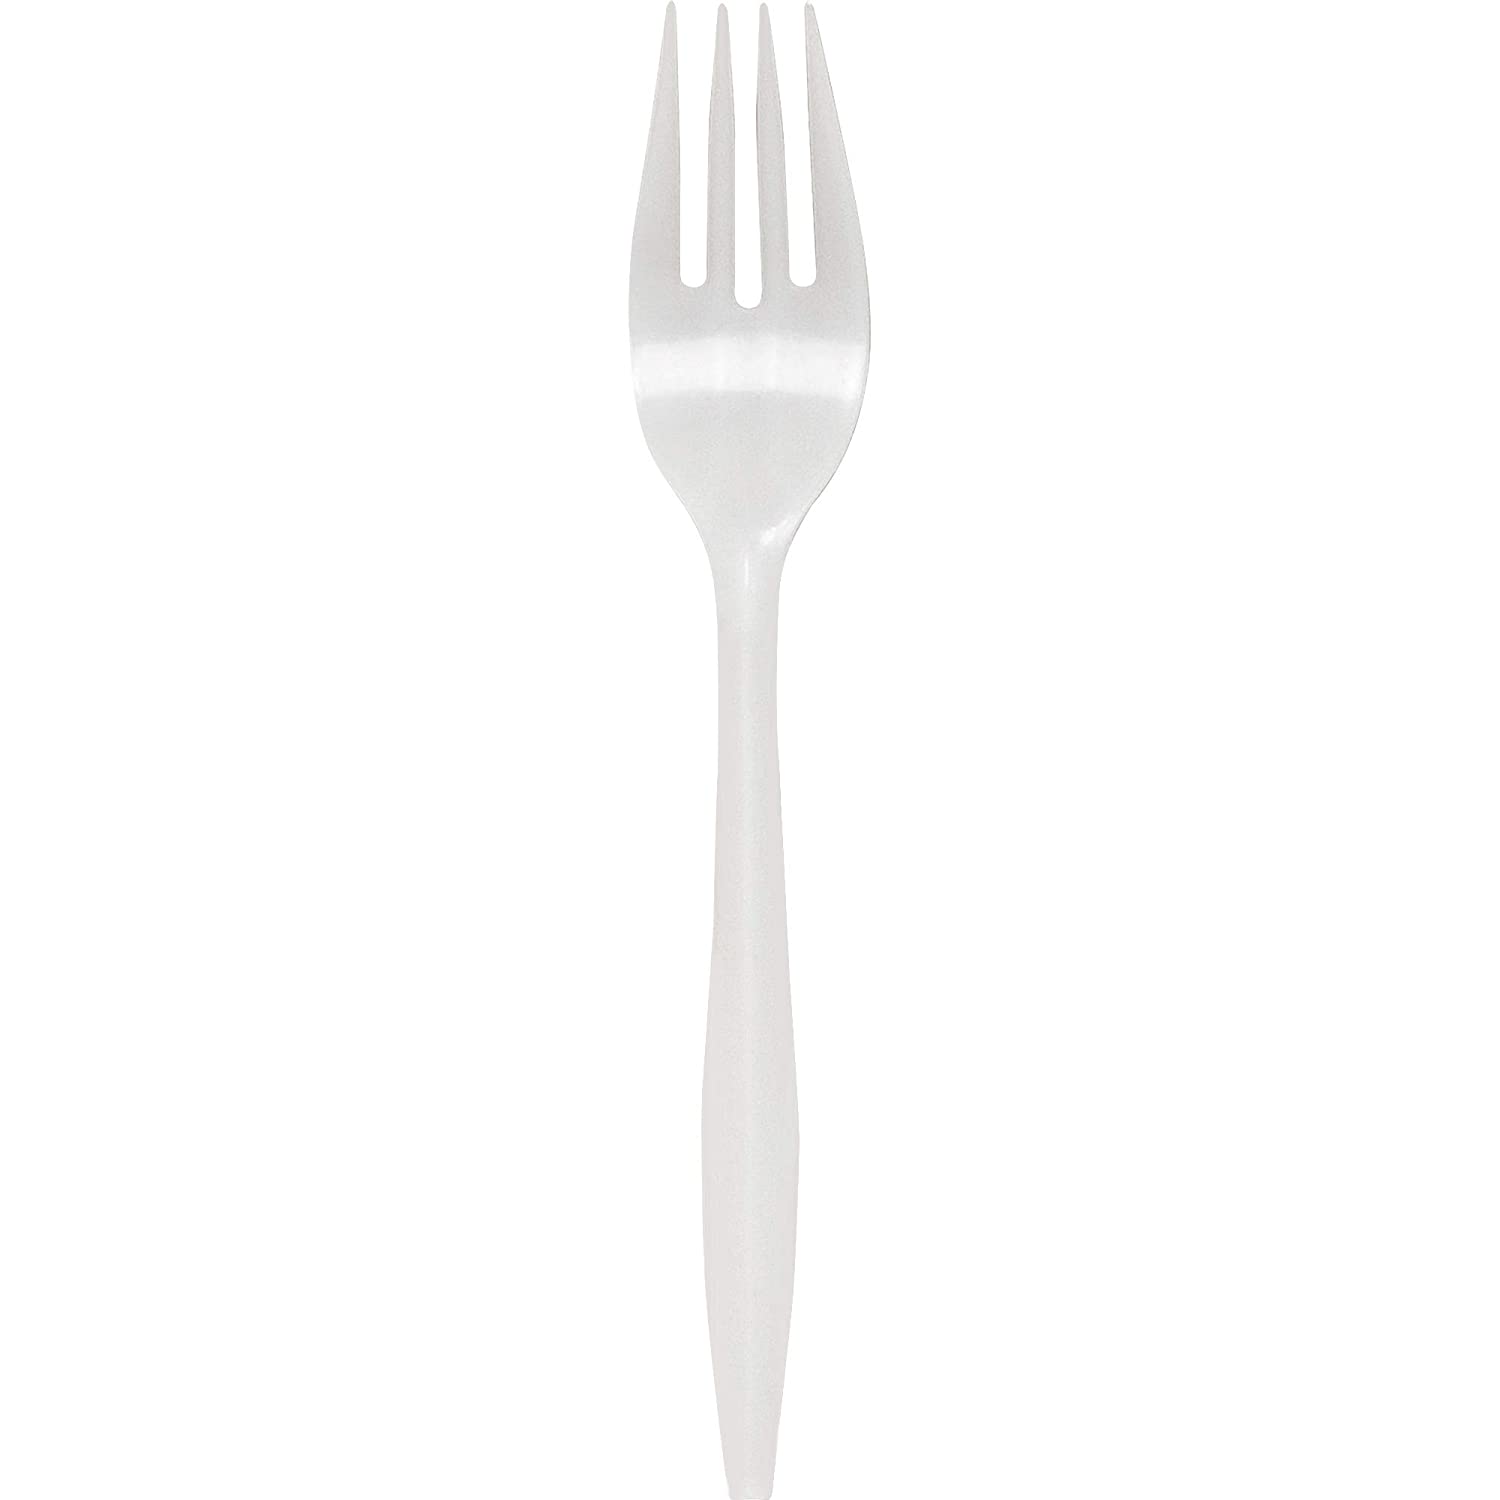 Medium Weight Plastic Fork 1000/CS